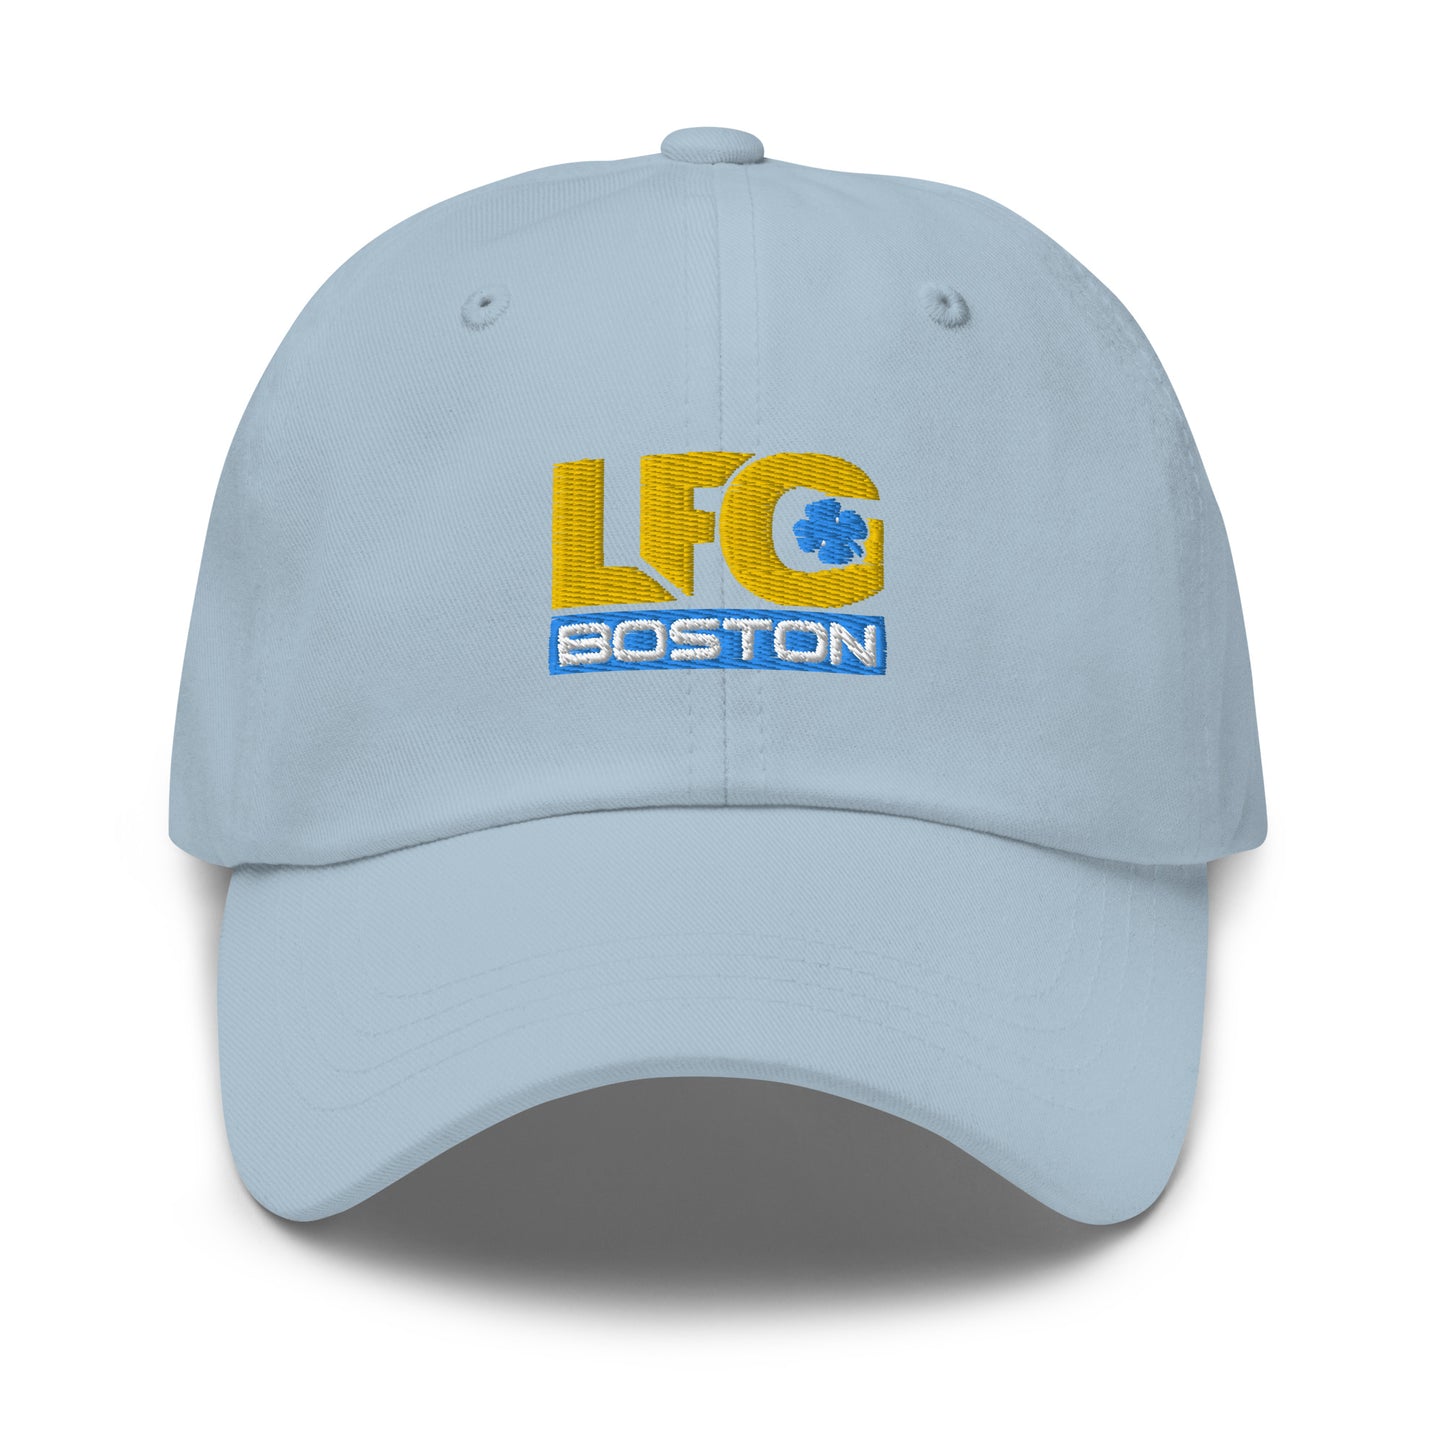 LFG Boston hat